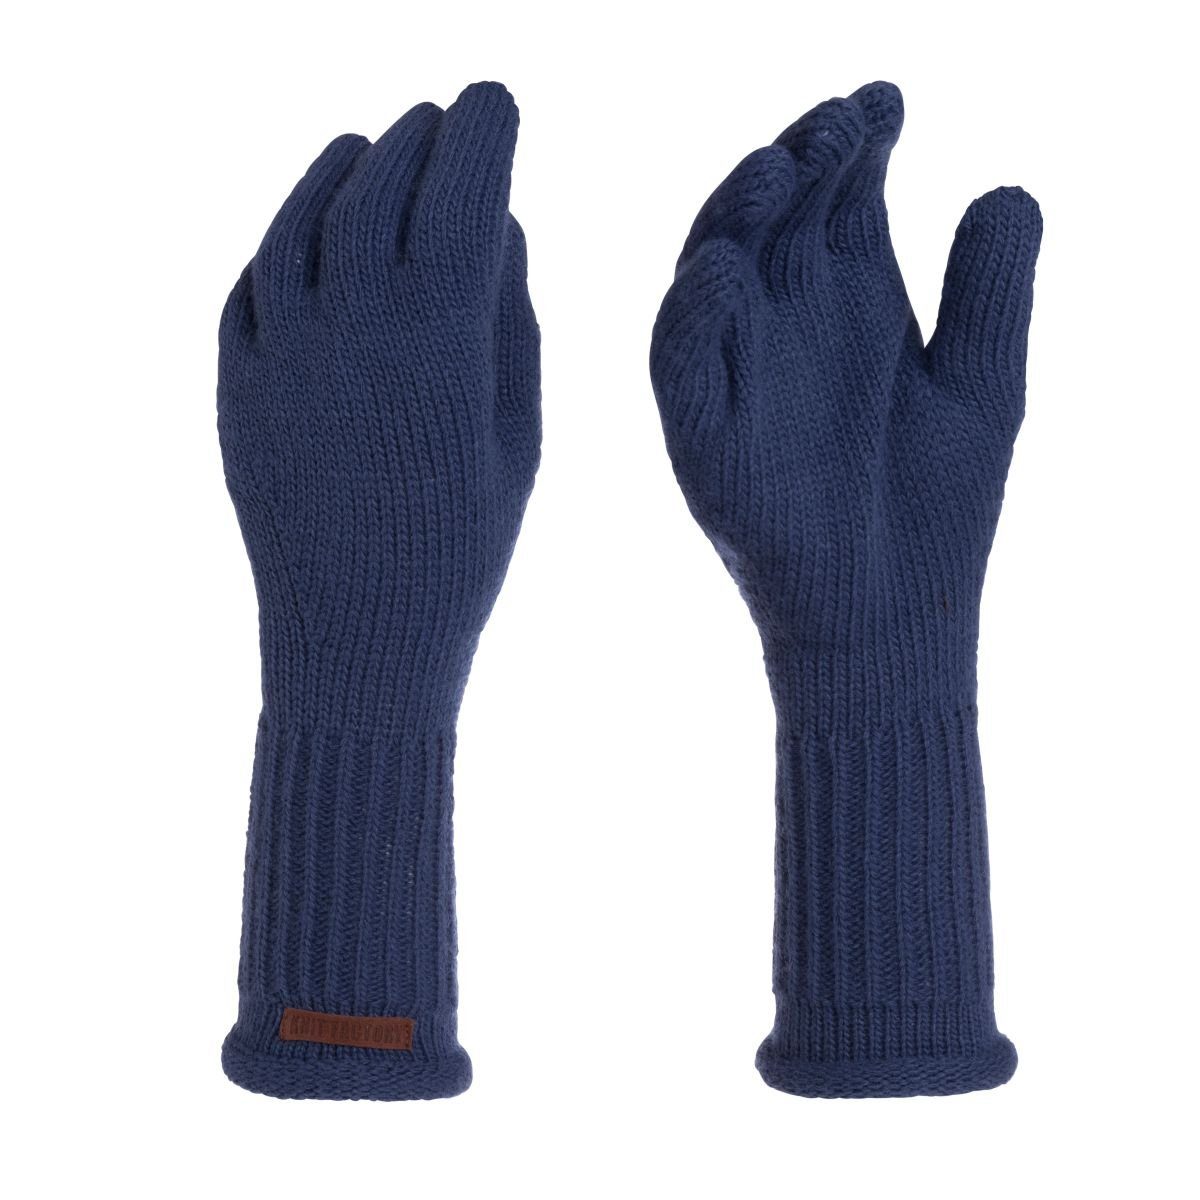 One Strickhandschuhe Handstulpen ihne Handschuhe Glatt Size Handschuhe Knit Lana Handschuhe Dunkelblau Factory Finger